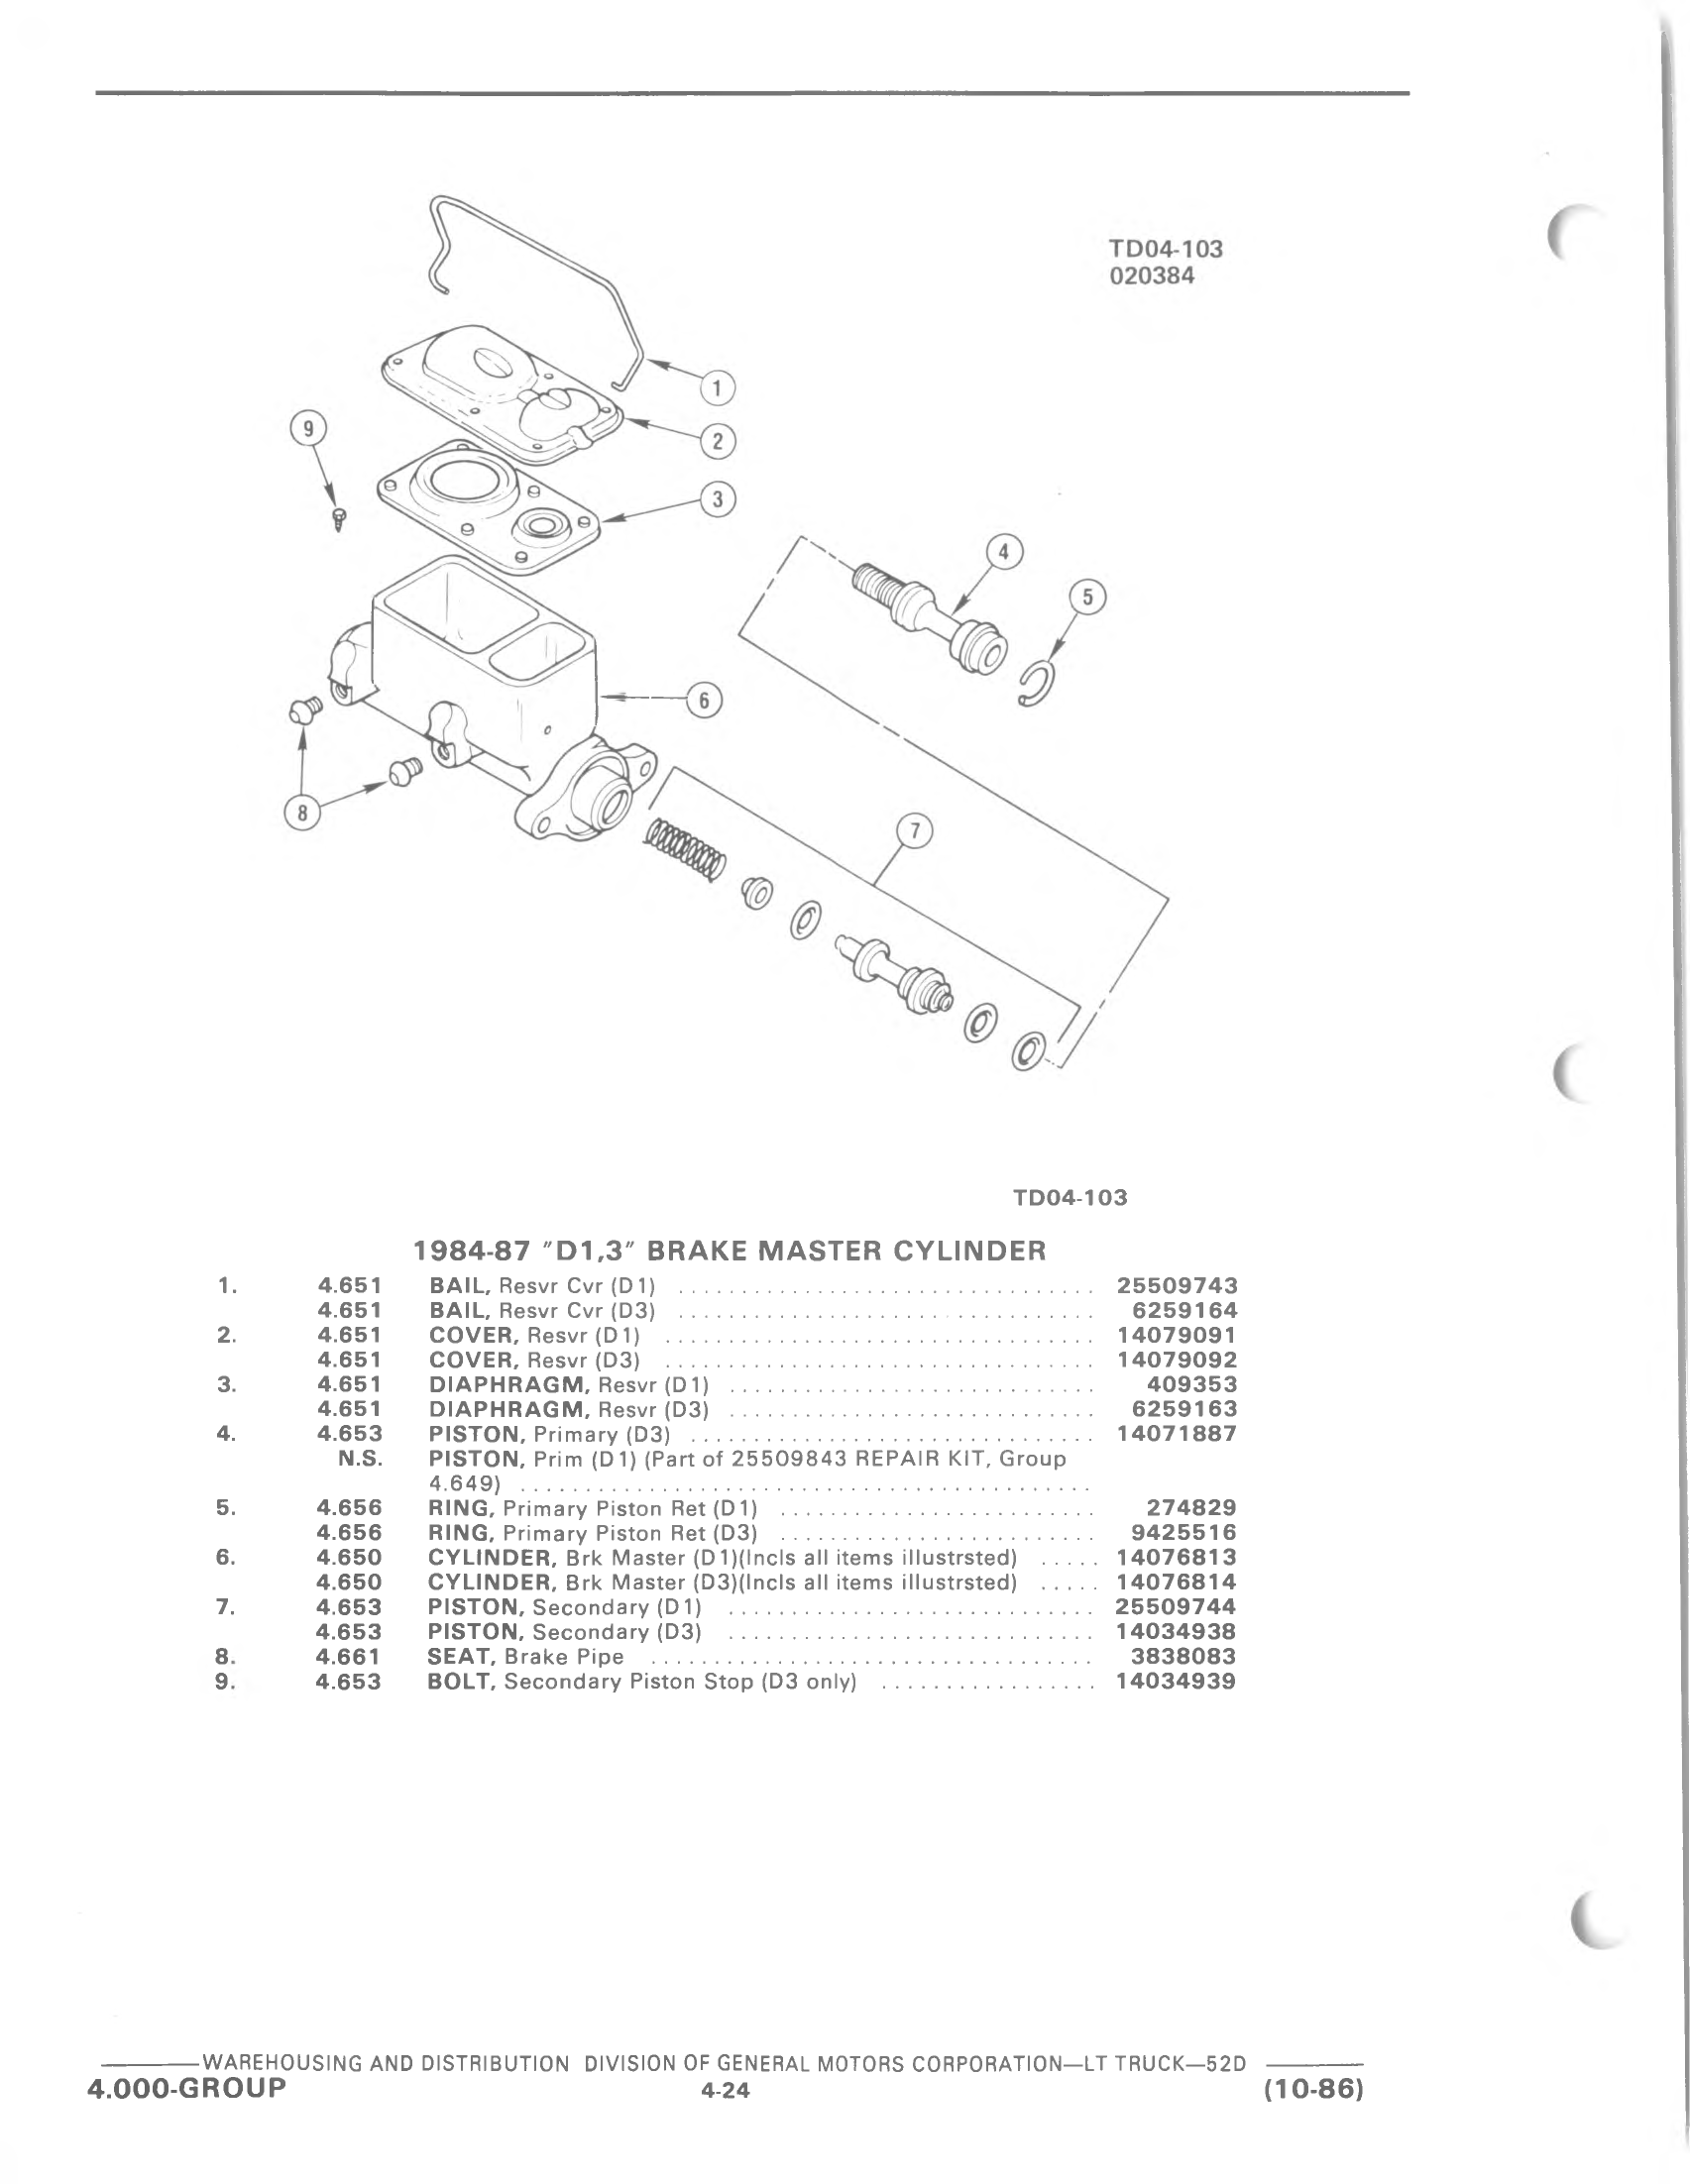 Parts and Accessories Catalog 52D October 1986